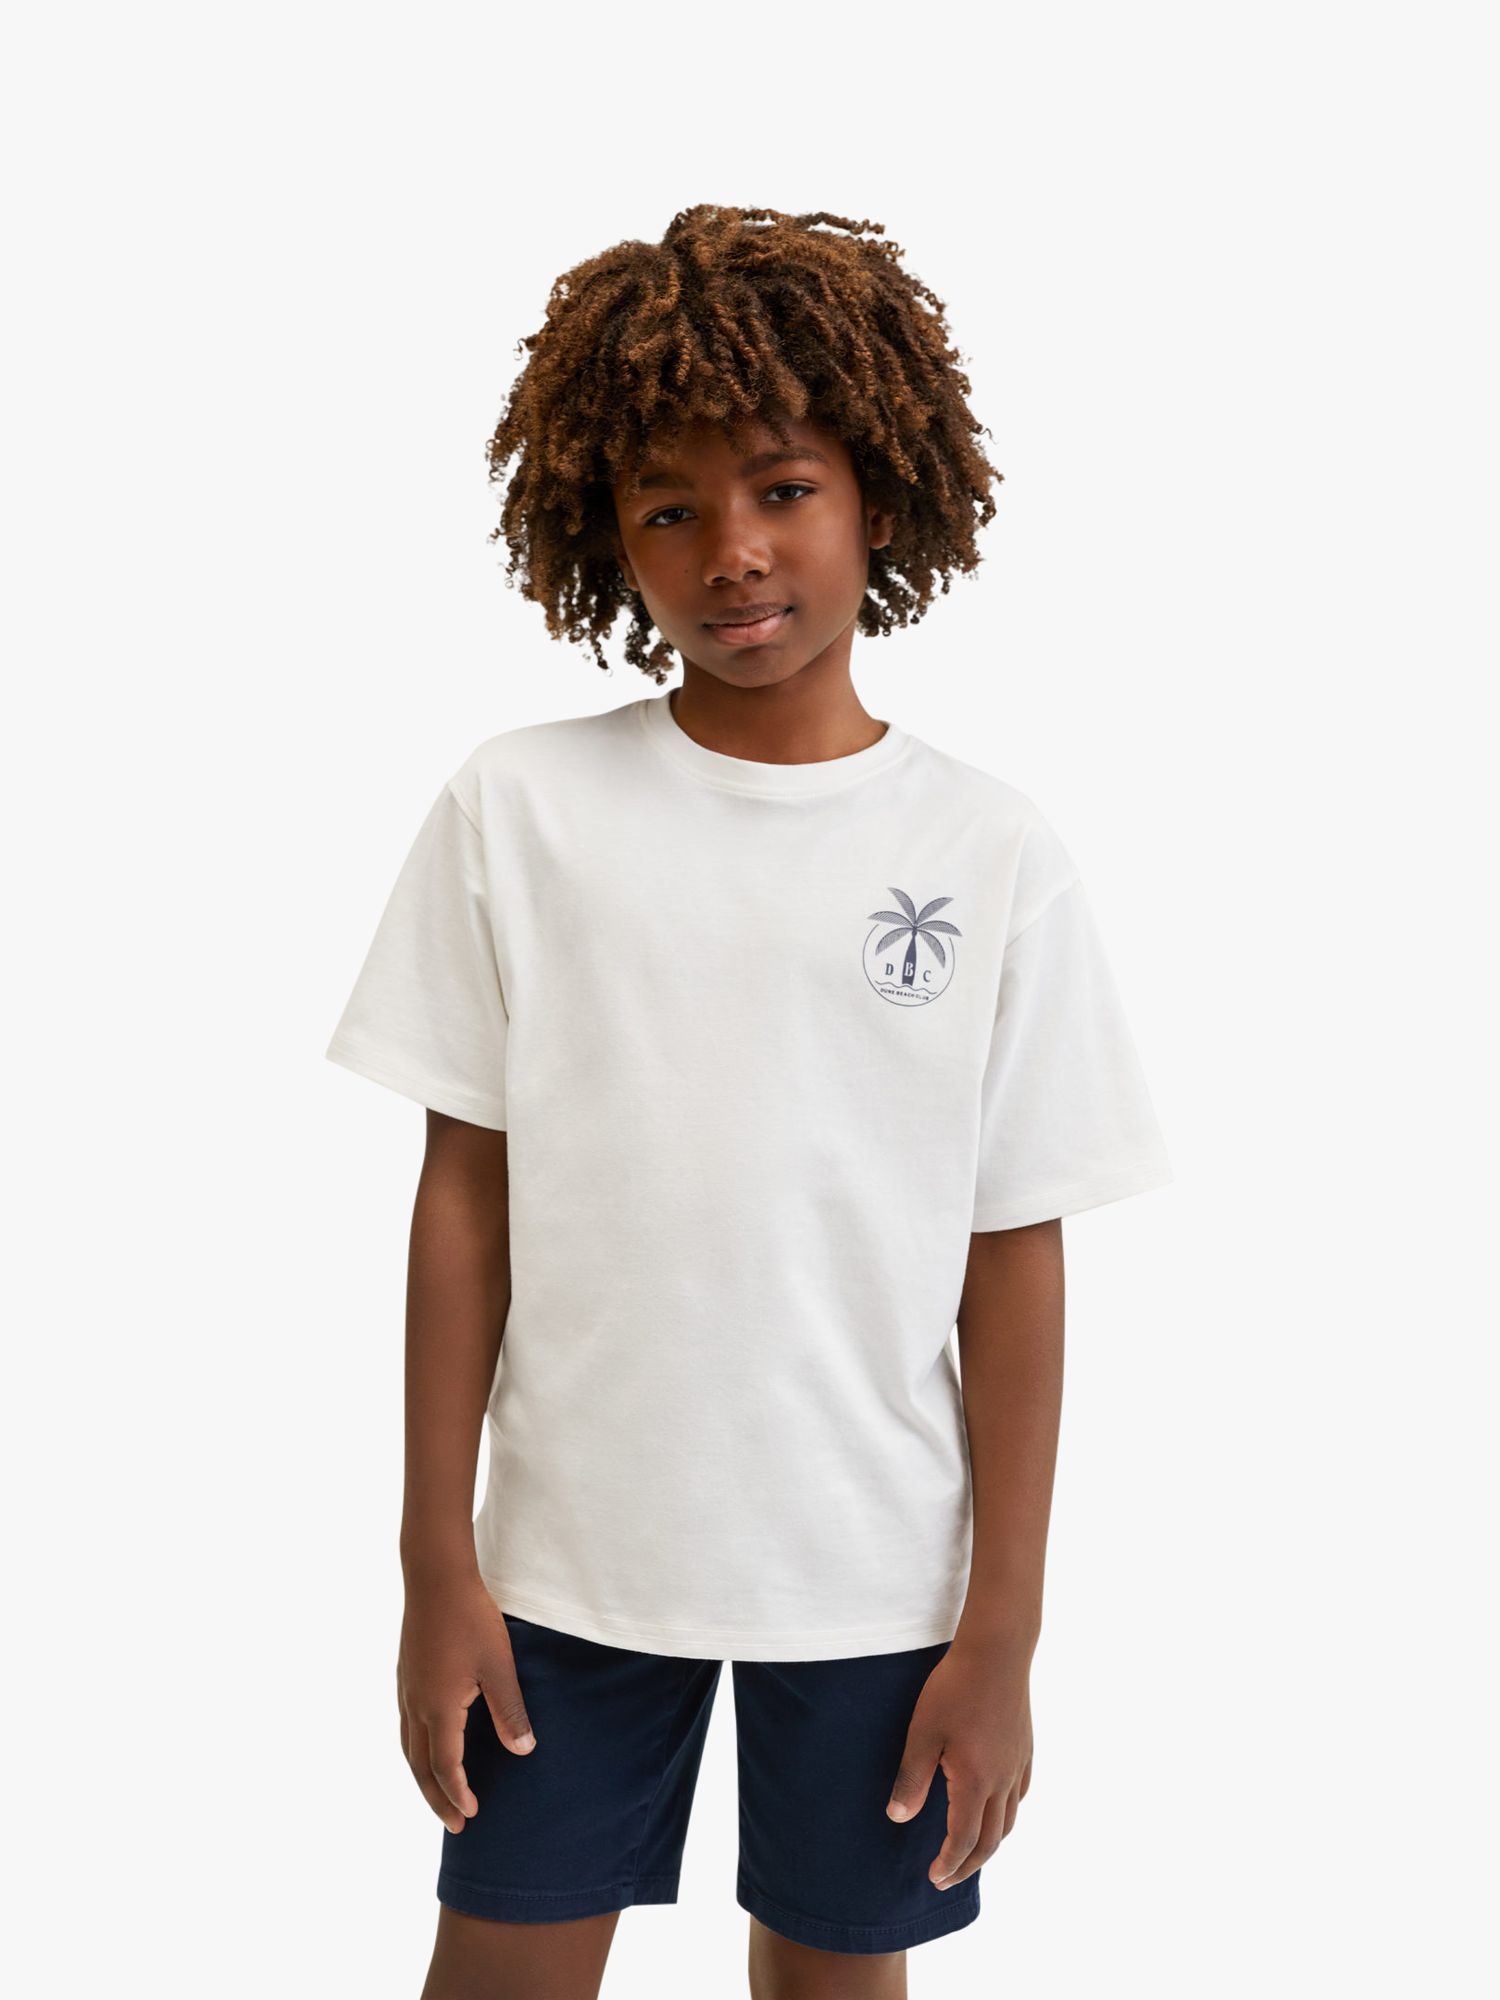 Mango Kids' Duna Cotton Graphic Print T-Shirt, White